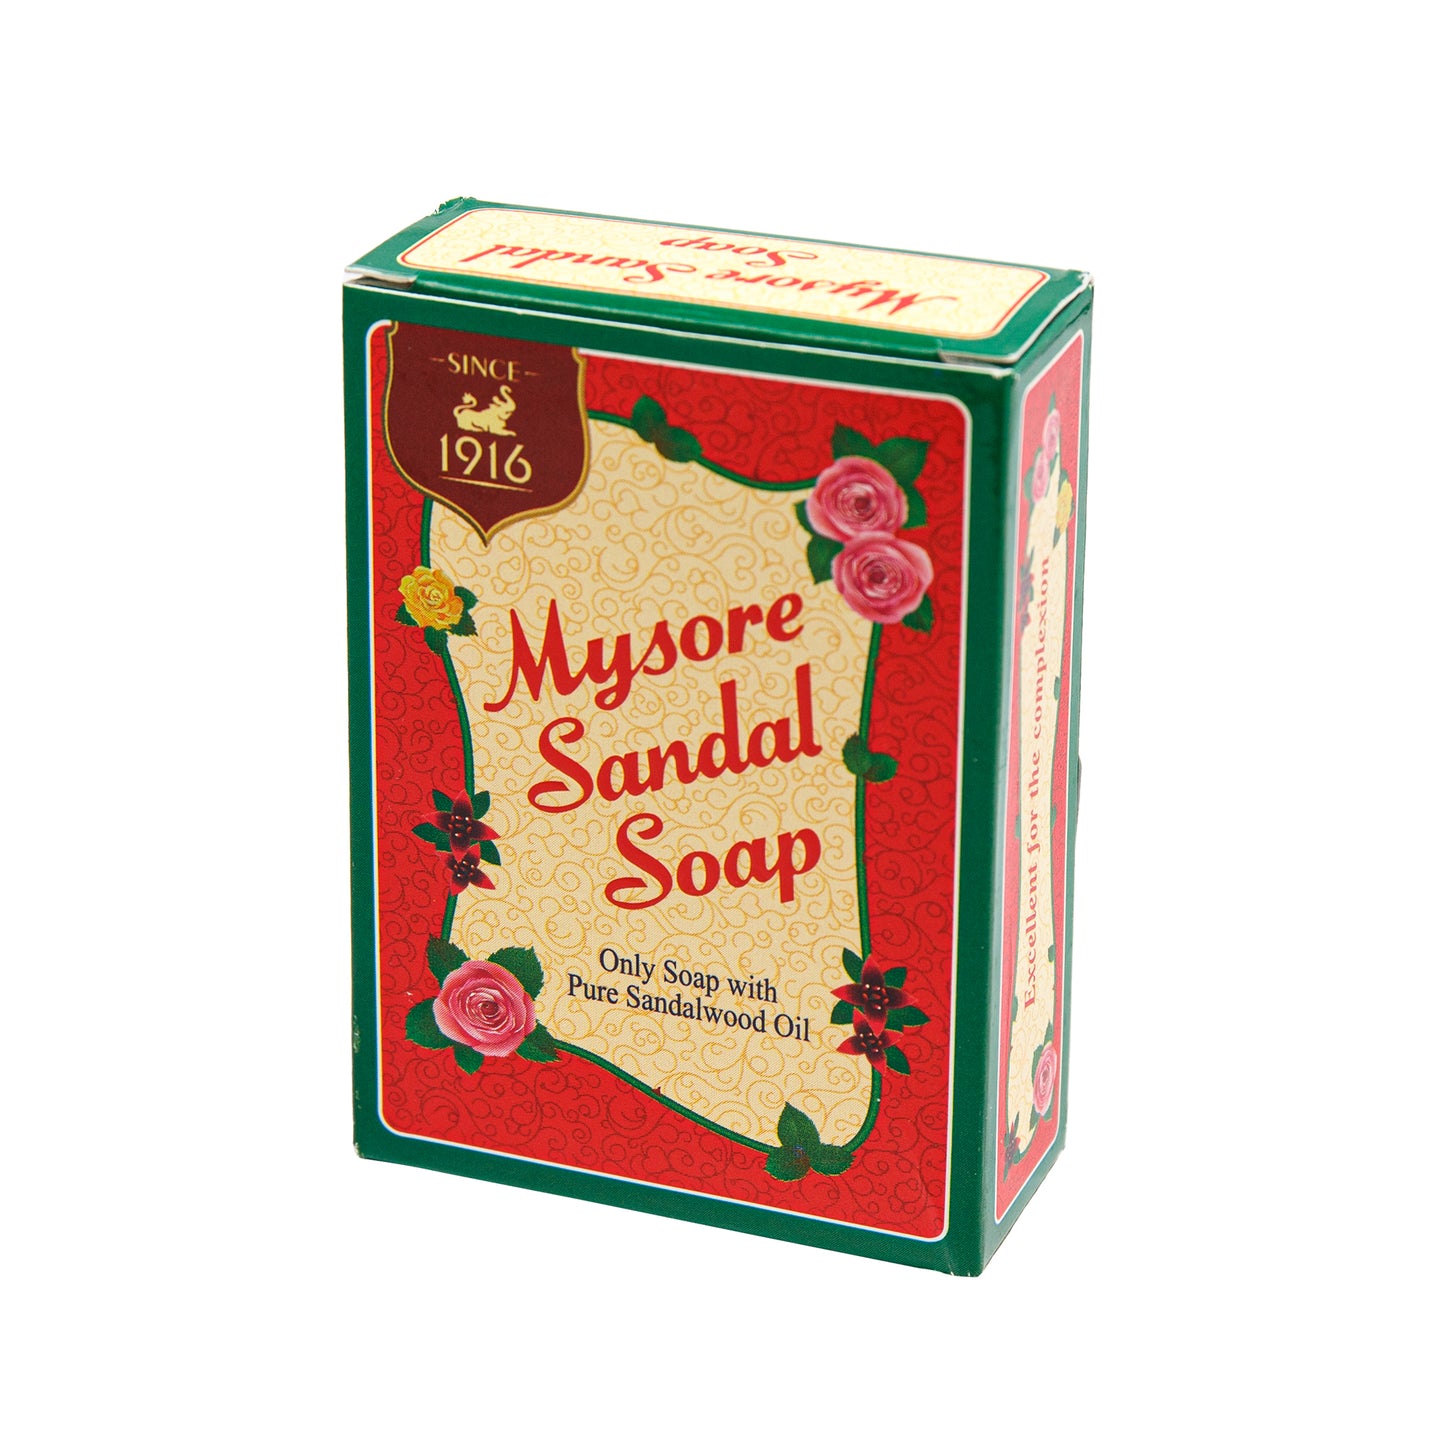 Primary image of Mysore Sandal Soap